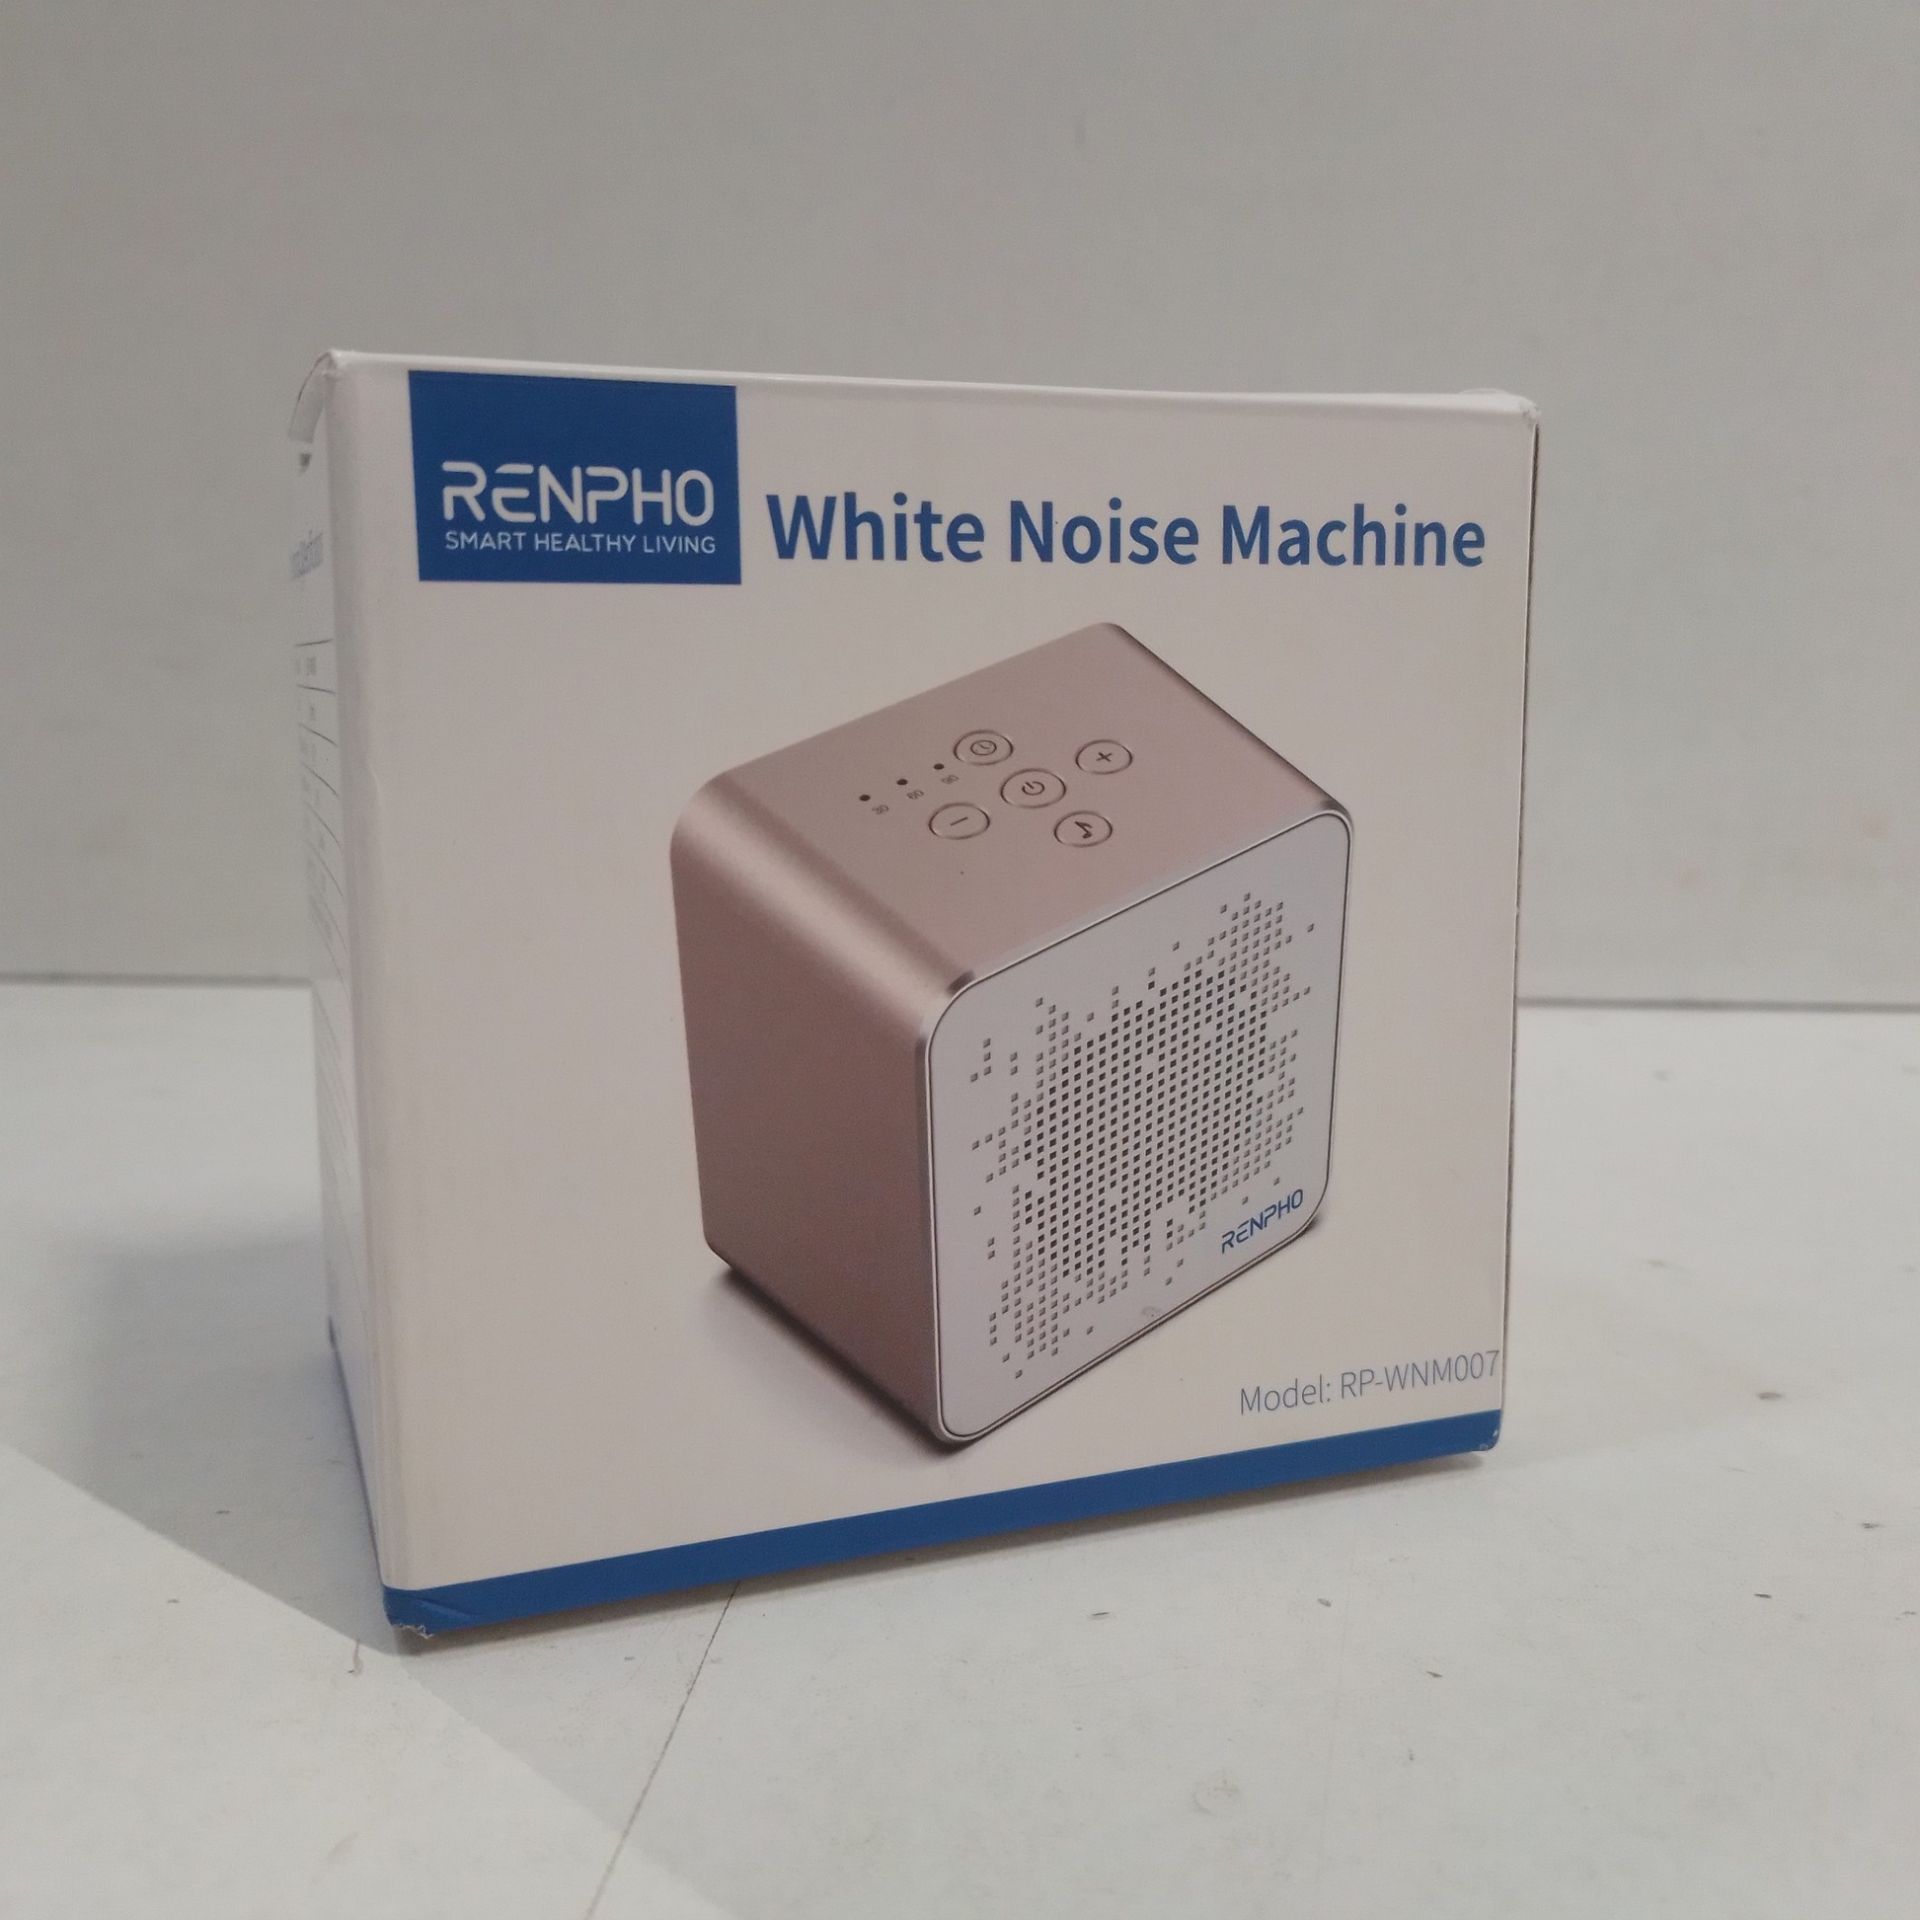 RRP £36.49 White Noise Machine - Image 2 of 2